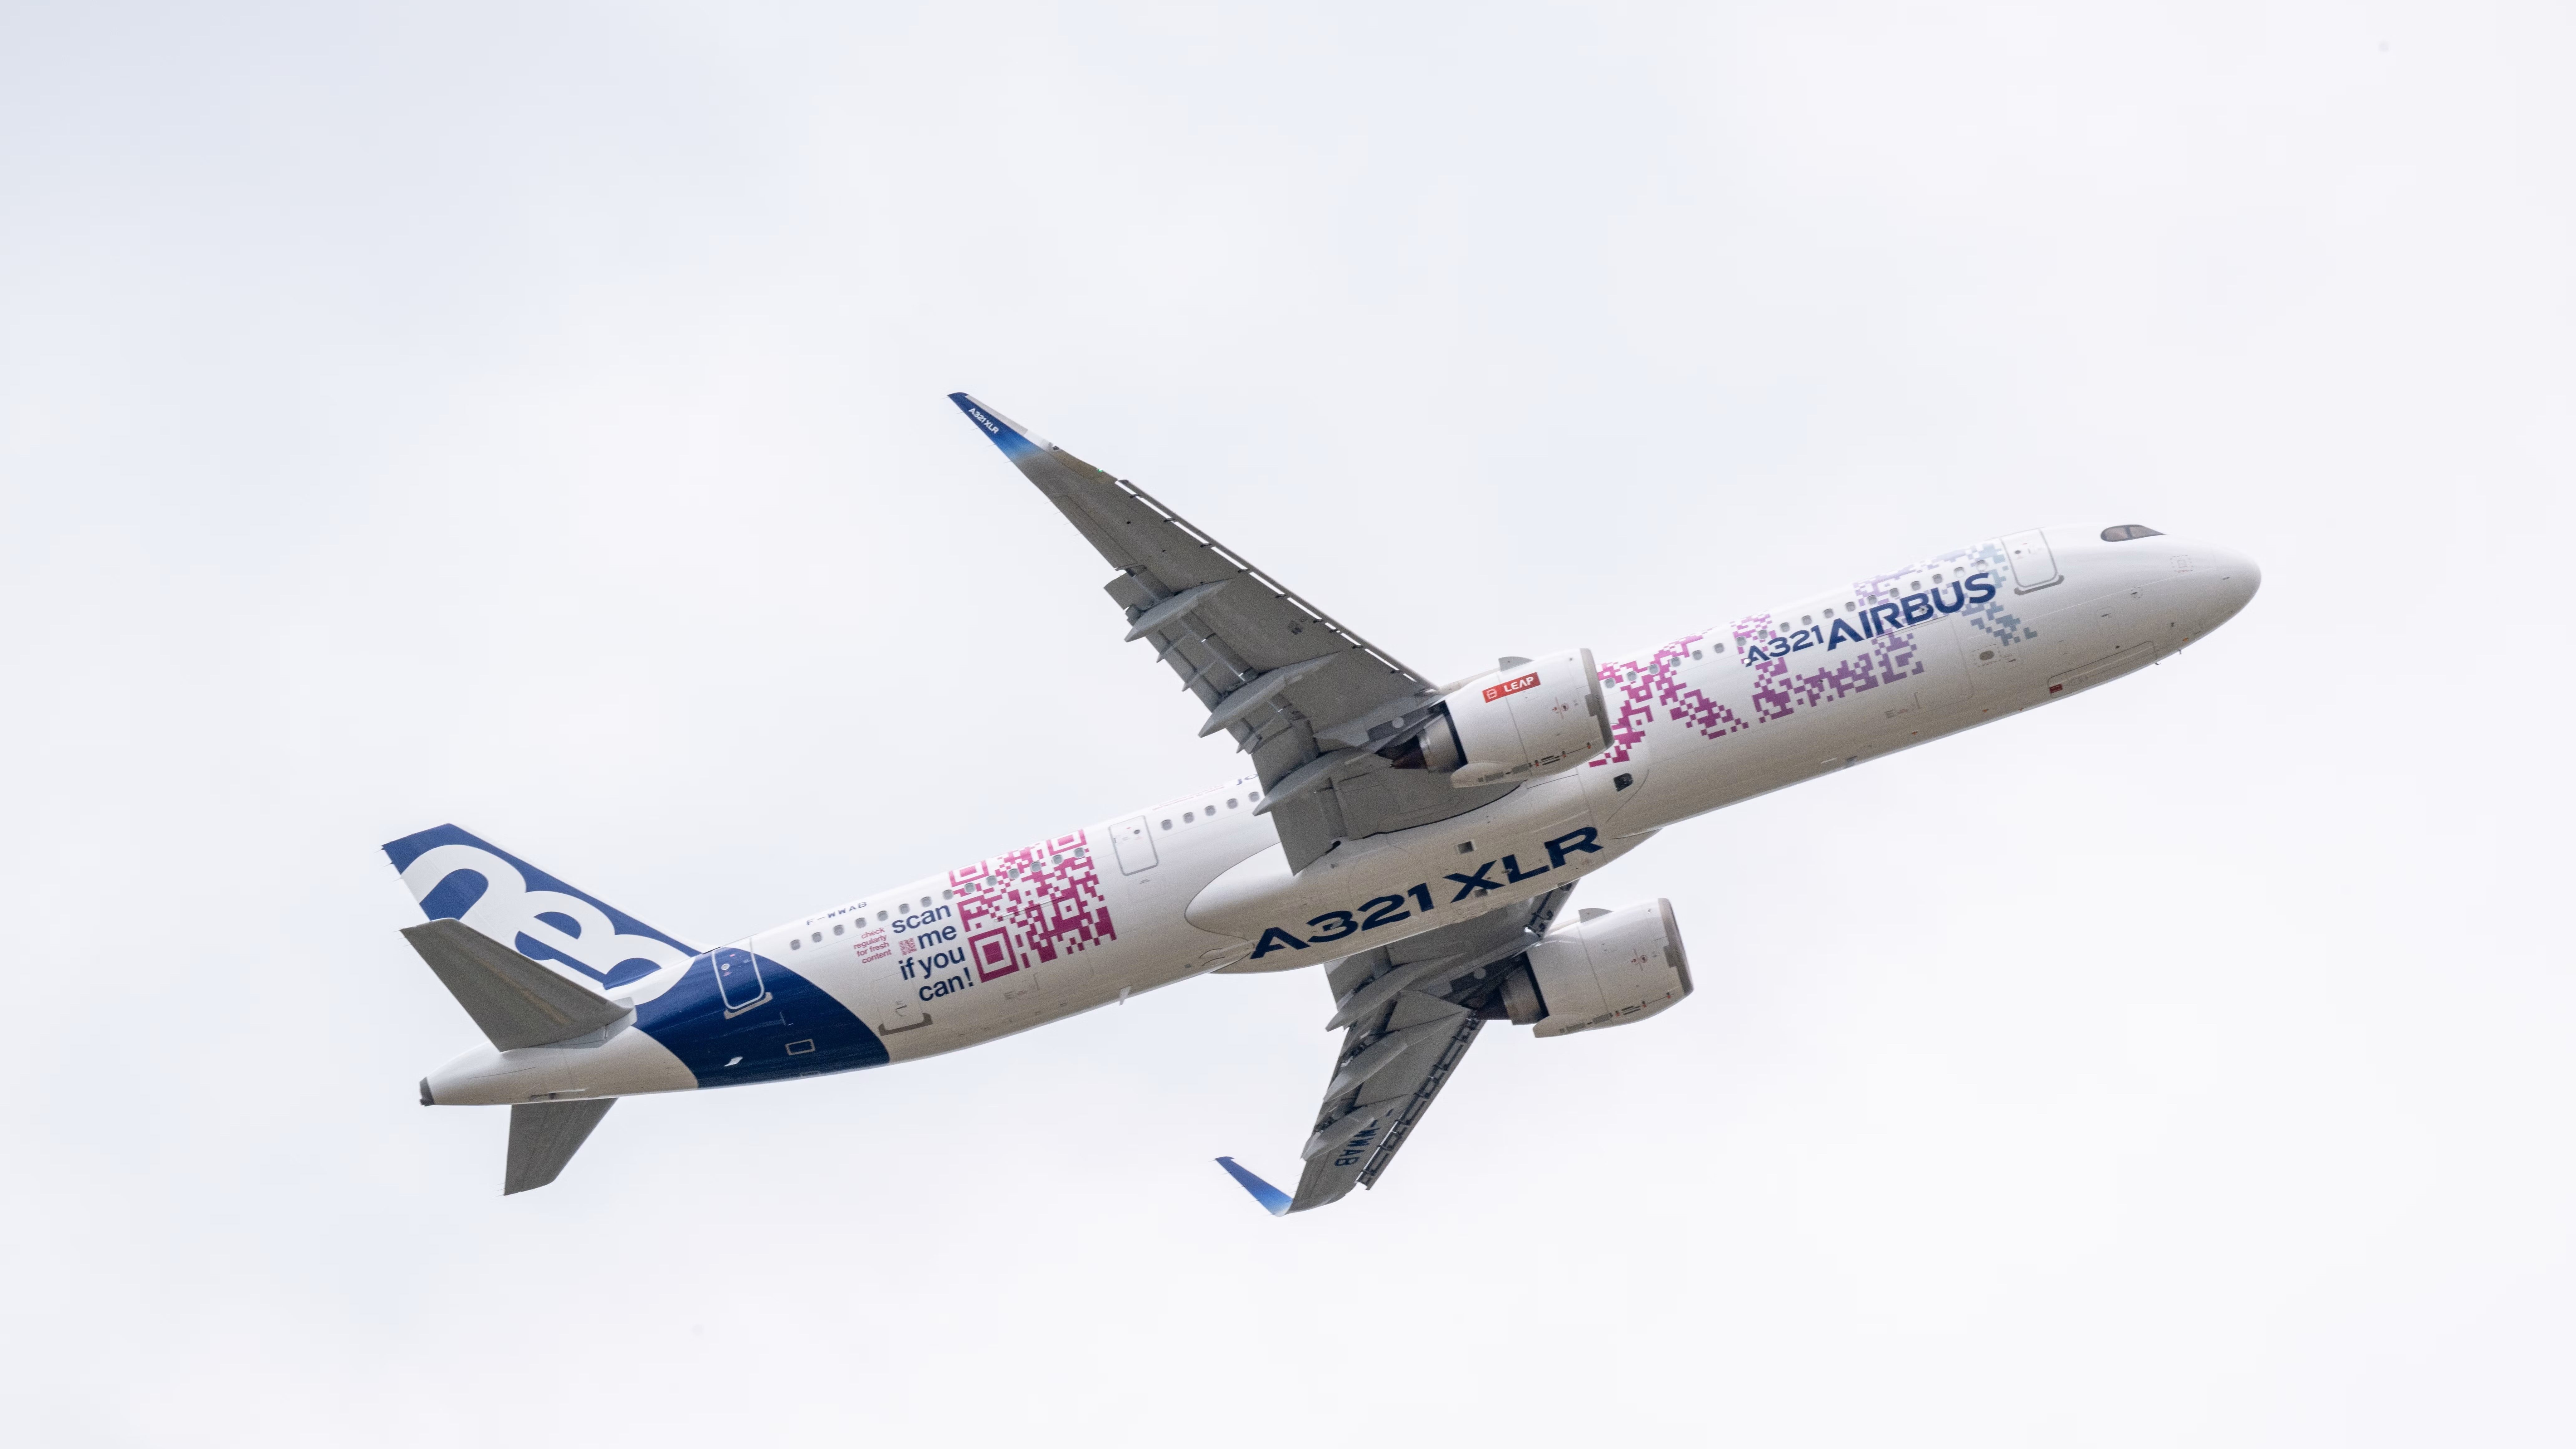 The Airbus A321XLR Flying Overhead During The Paris Air Show.